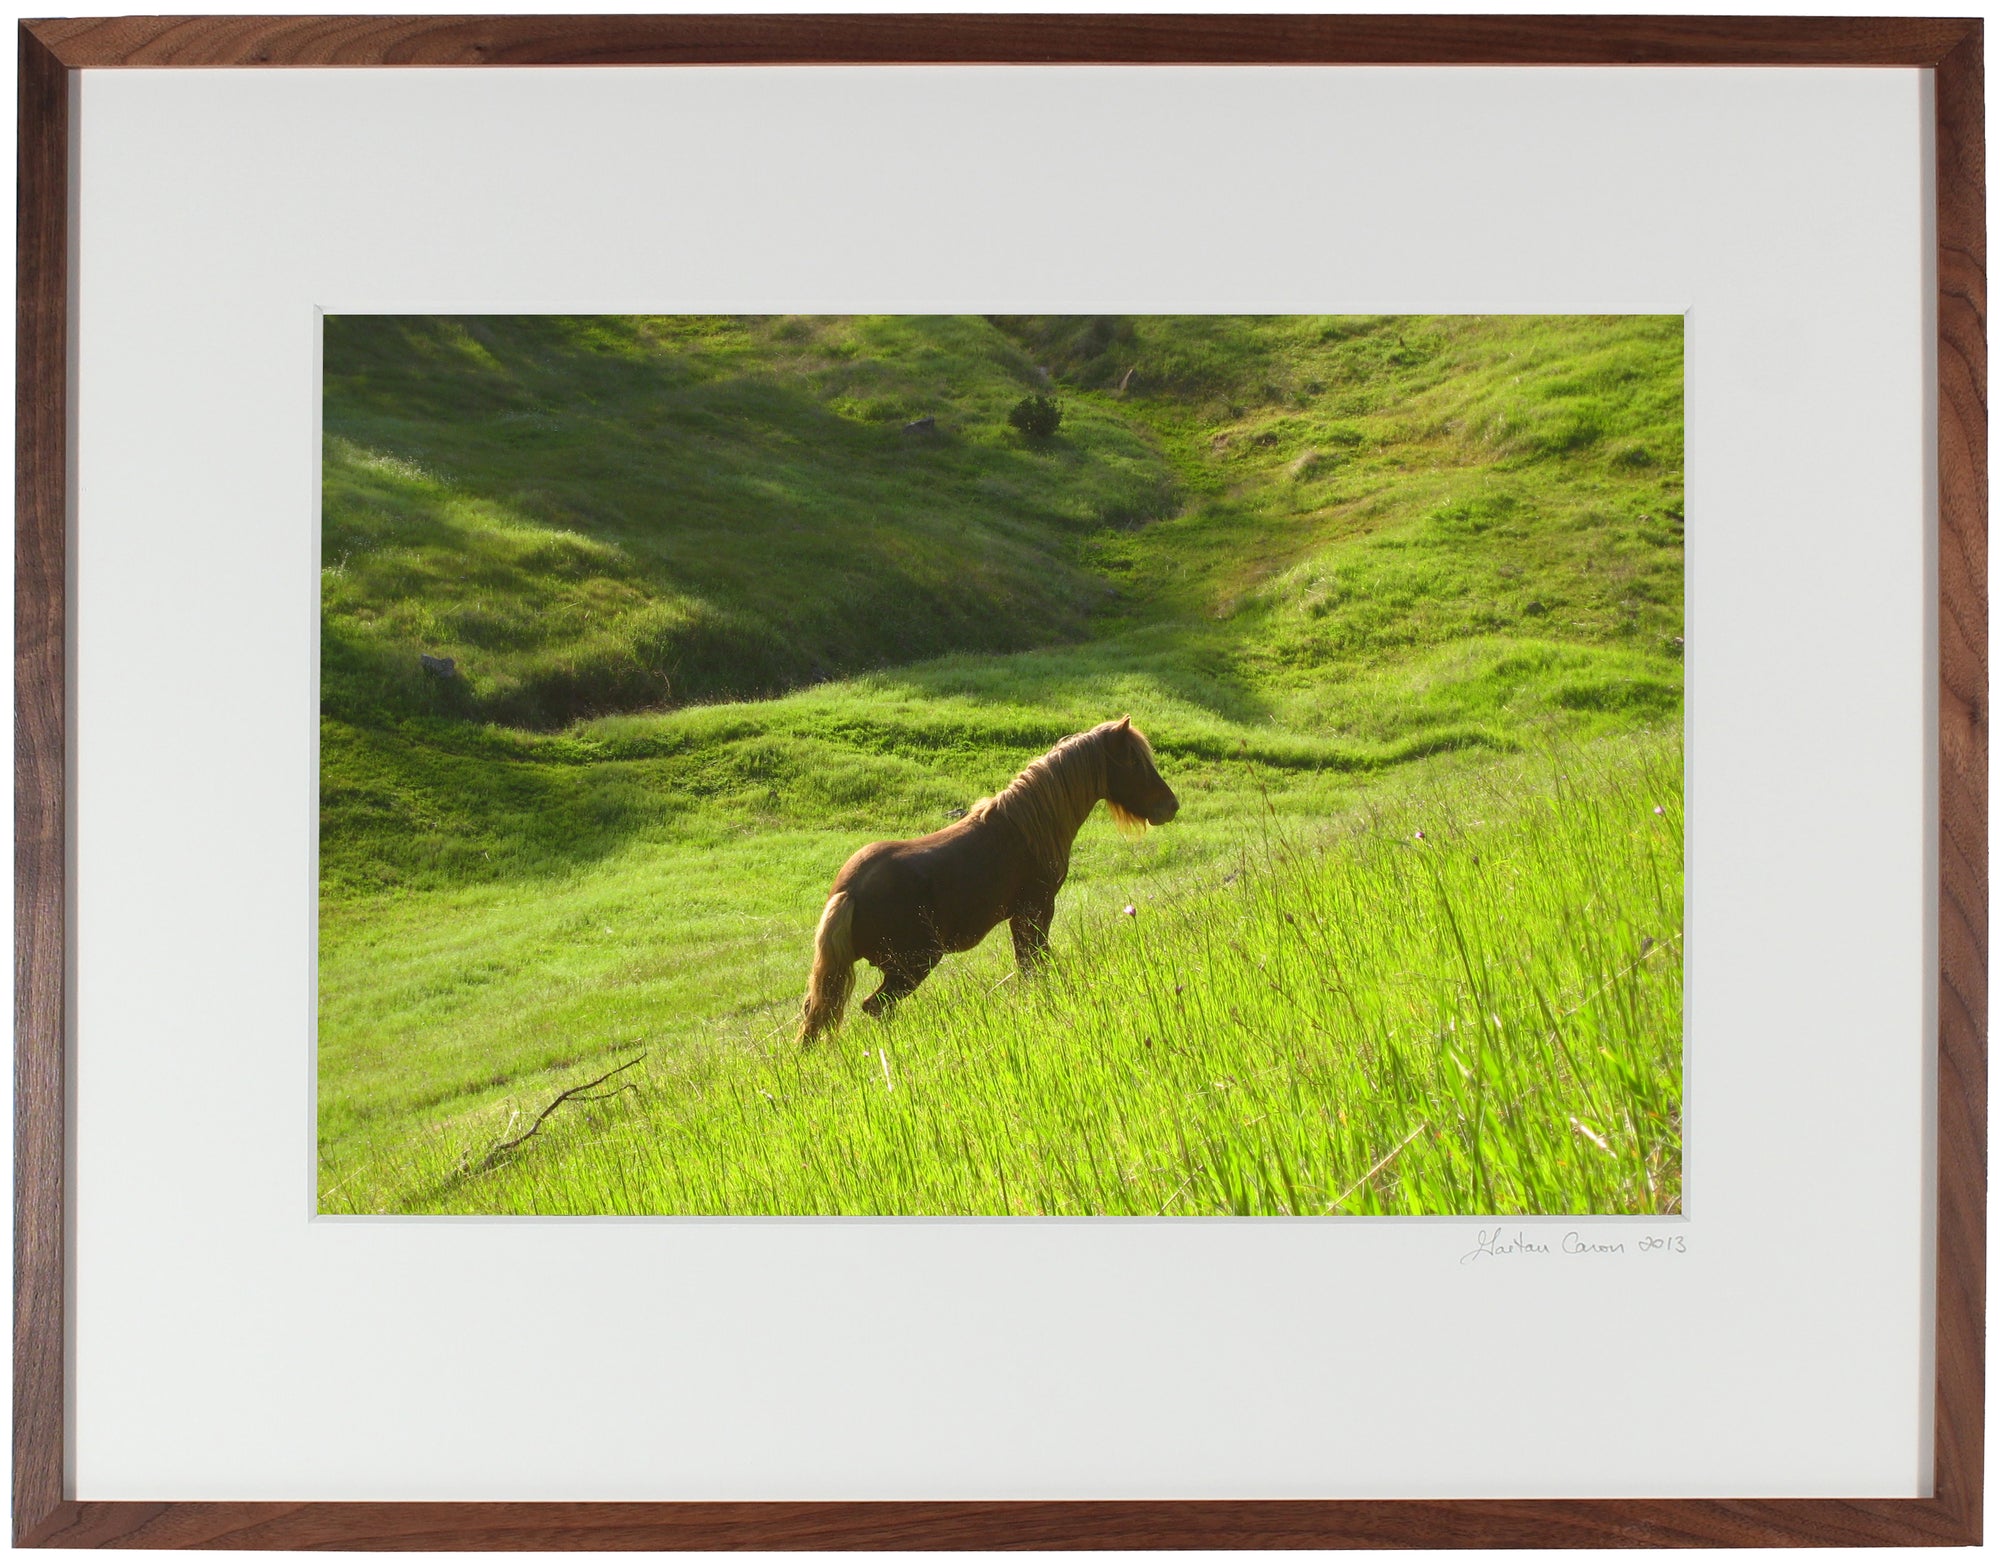 <I>Stallion in Green Meadow</I><br>Mendocino, California, 2010<br><br>GC0215